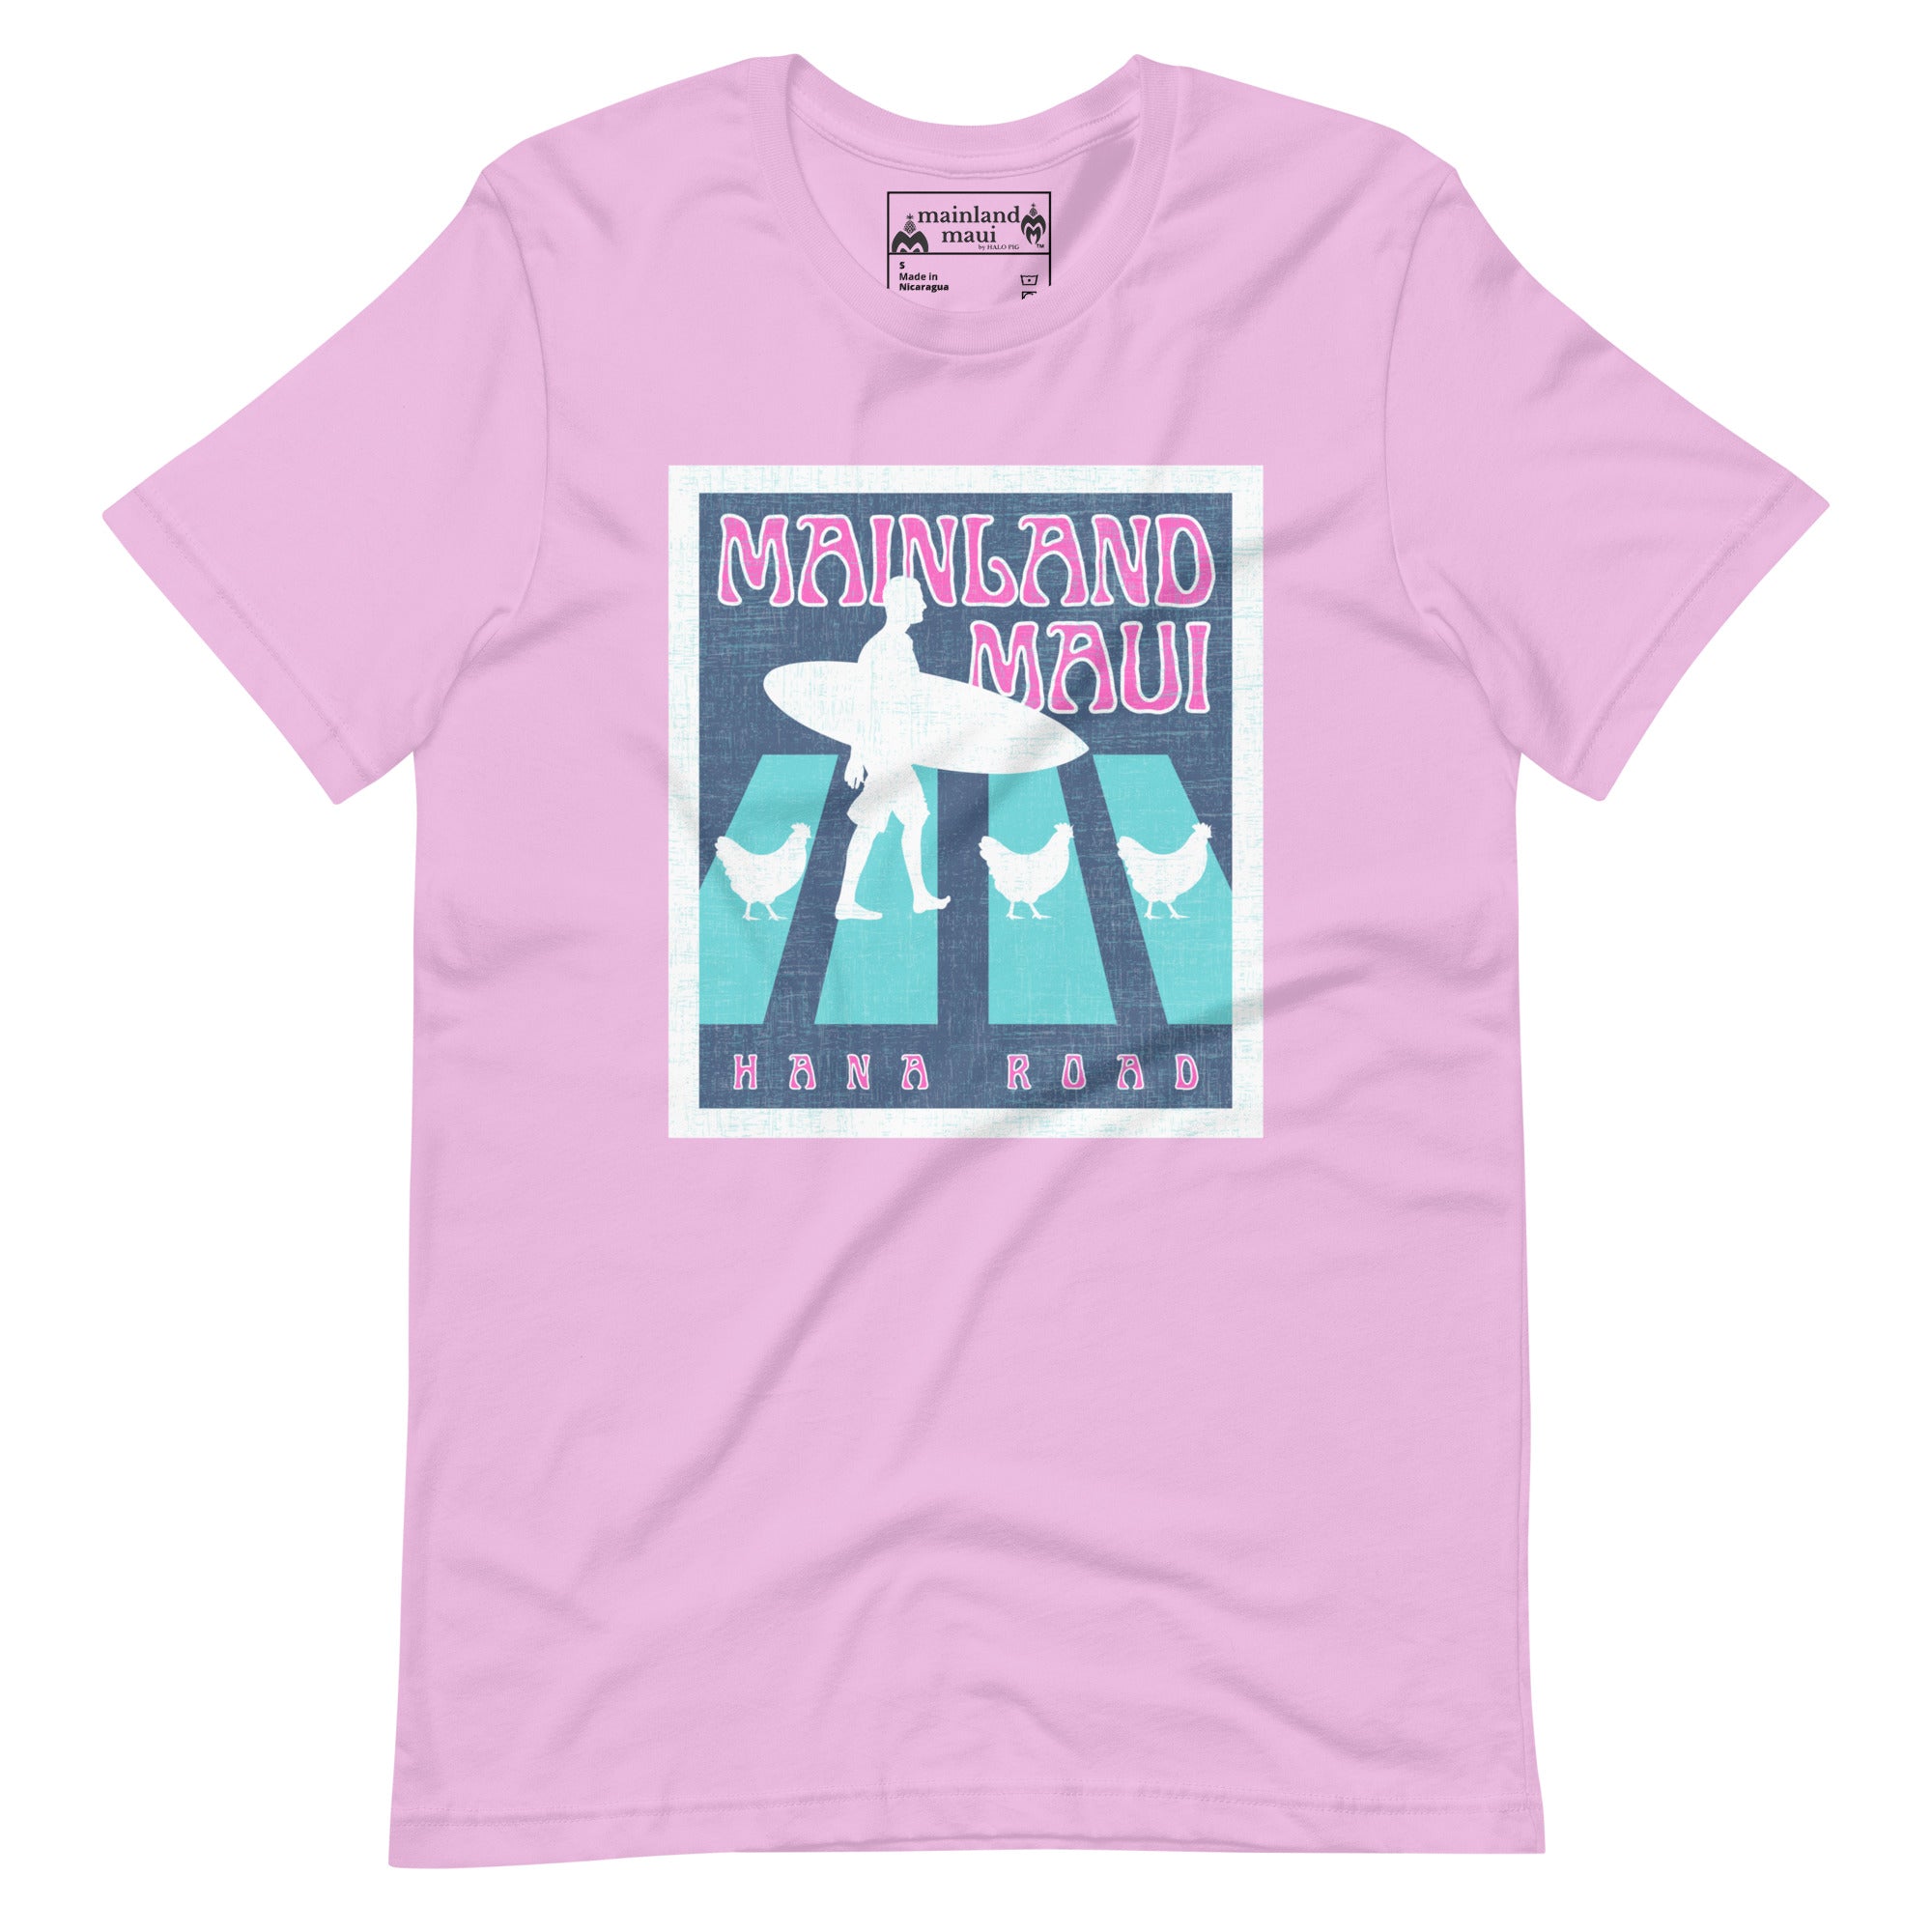 Mainland Maui "Hana Road - The Album" Men's/Unisex T-Shirt